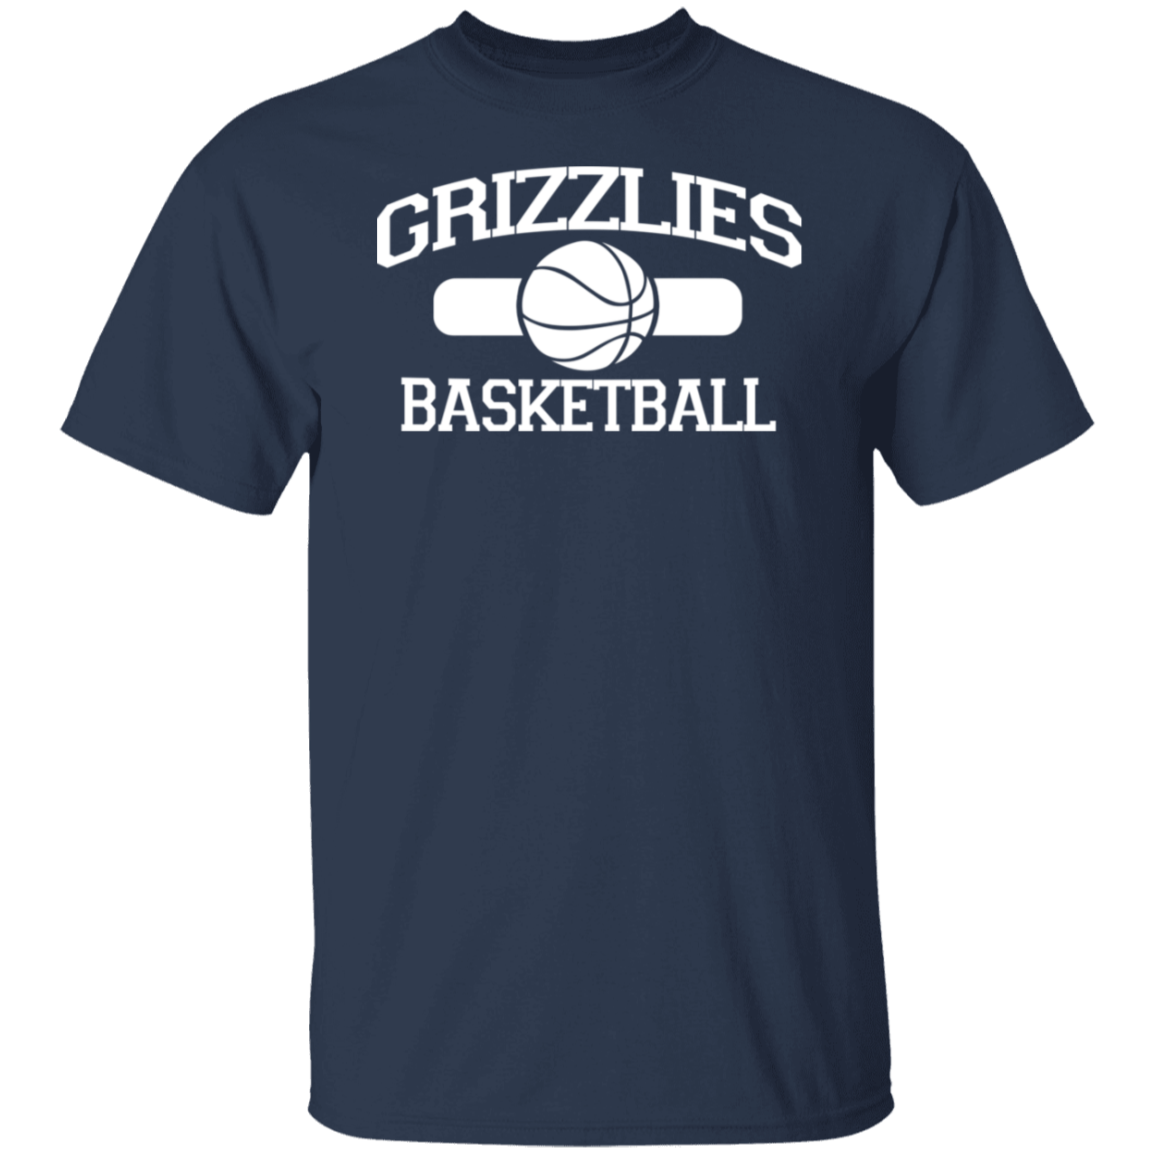 Grizzlies Basketball White Print T-Shirt